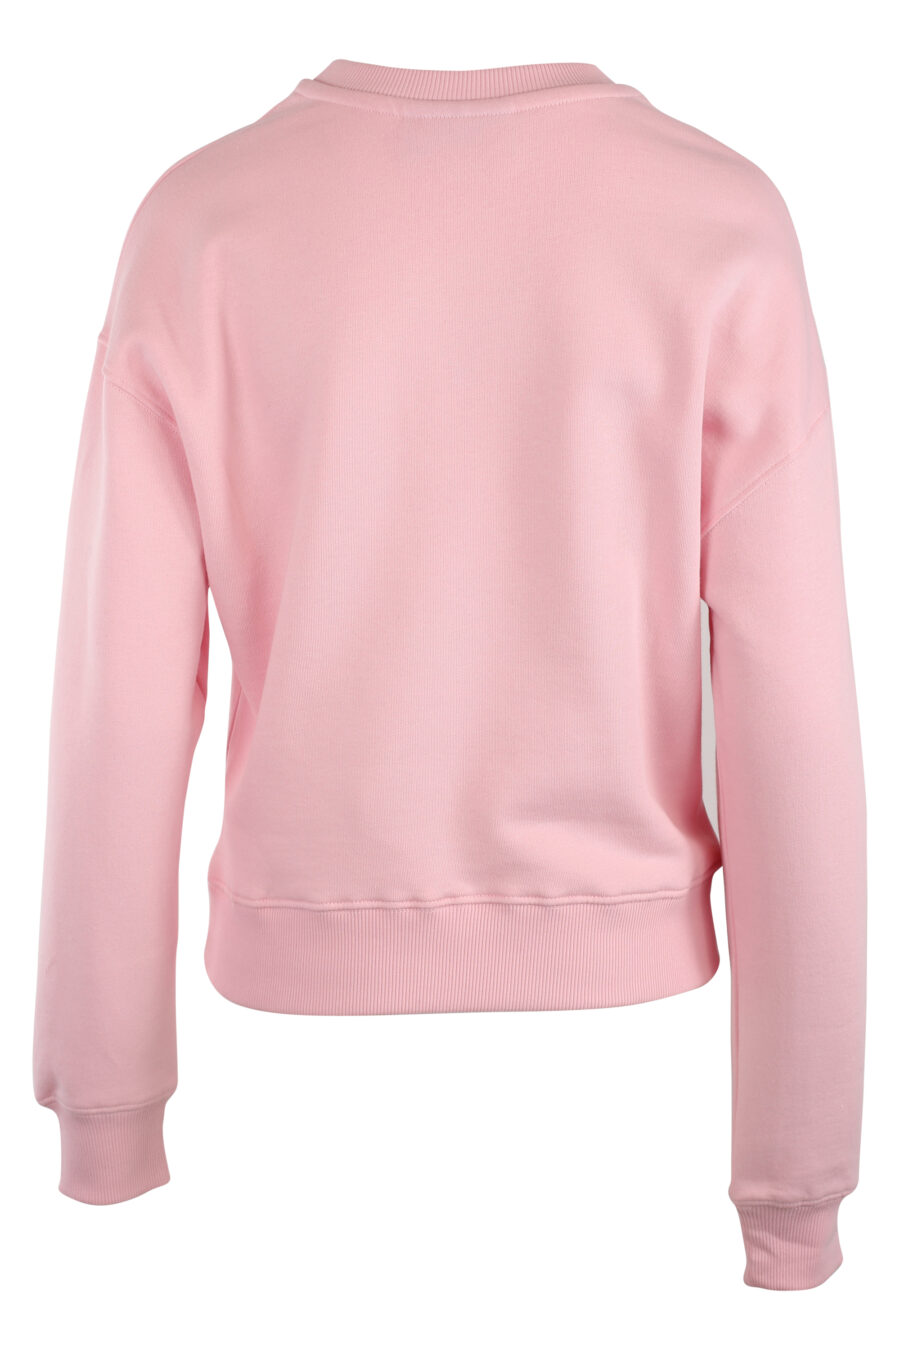 Pink sweatshirt with eye and star logo - IMG 5514